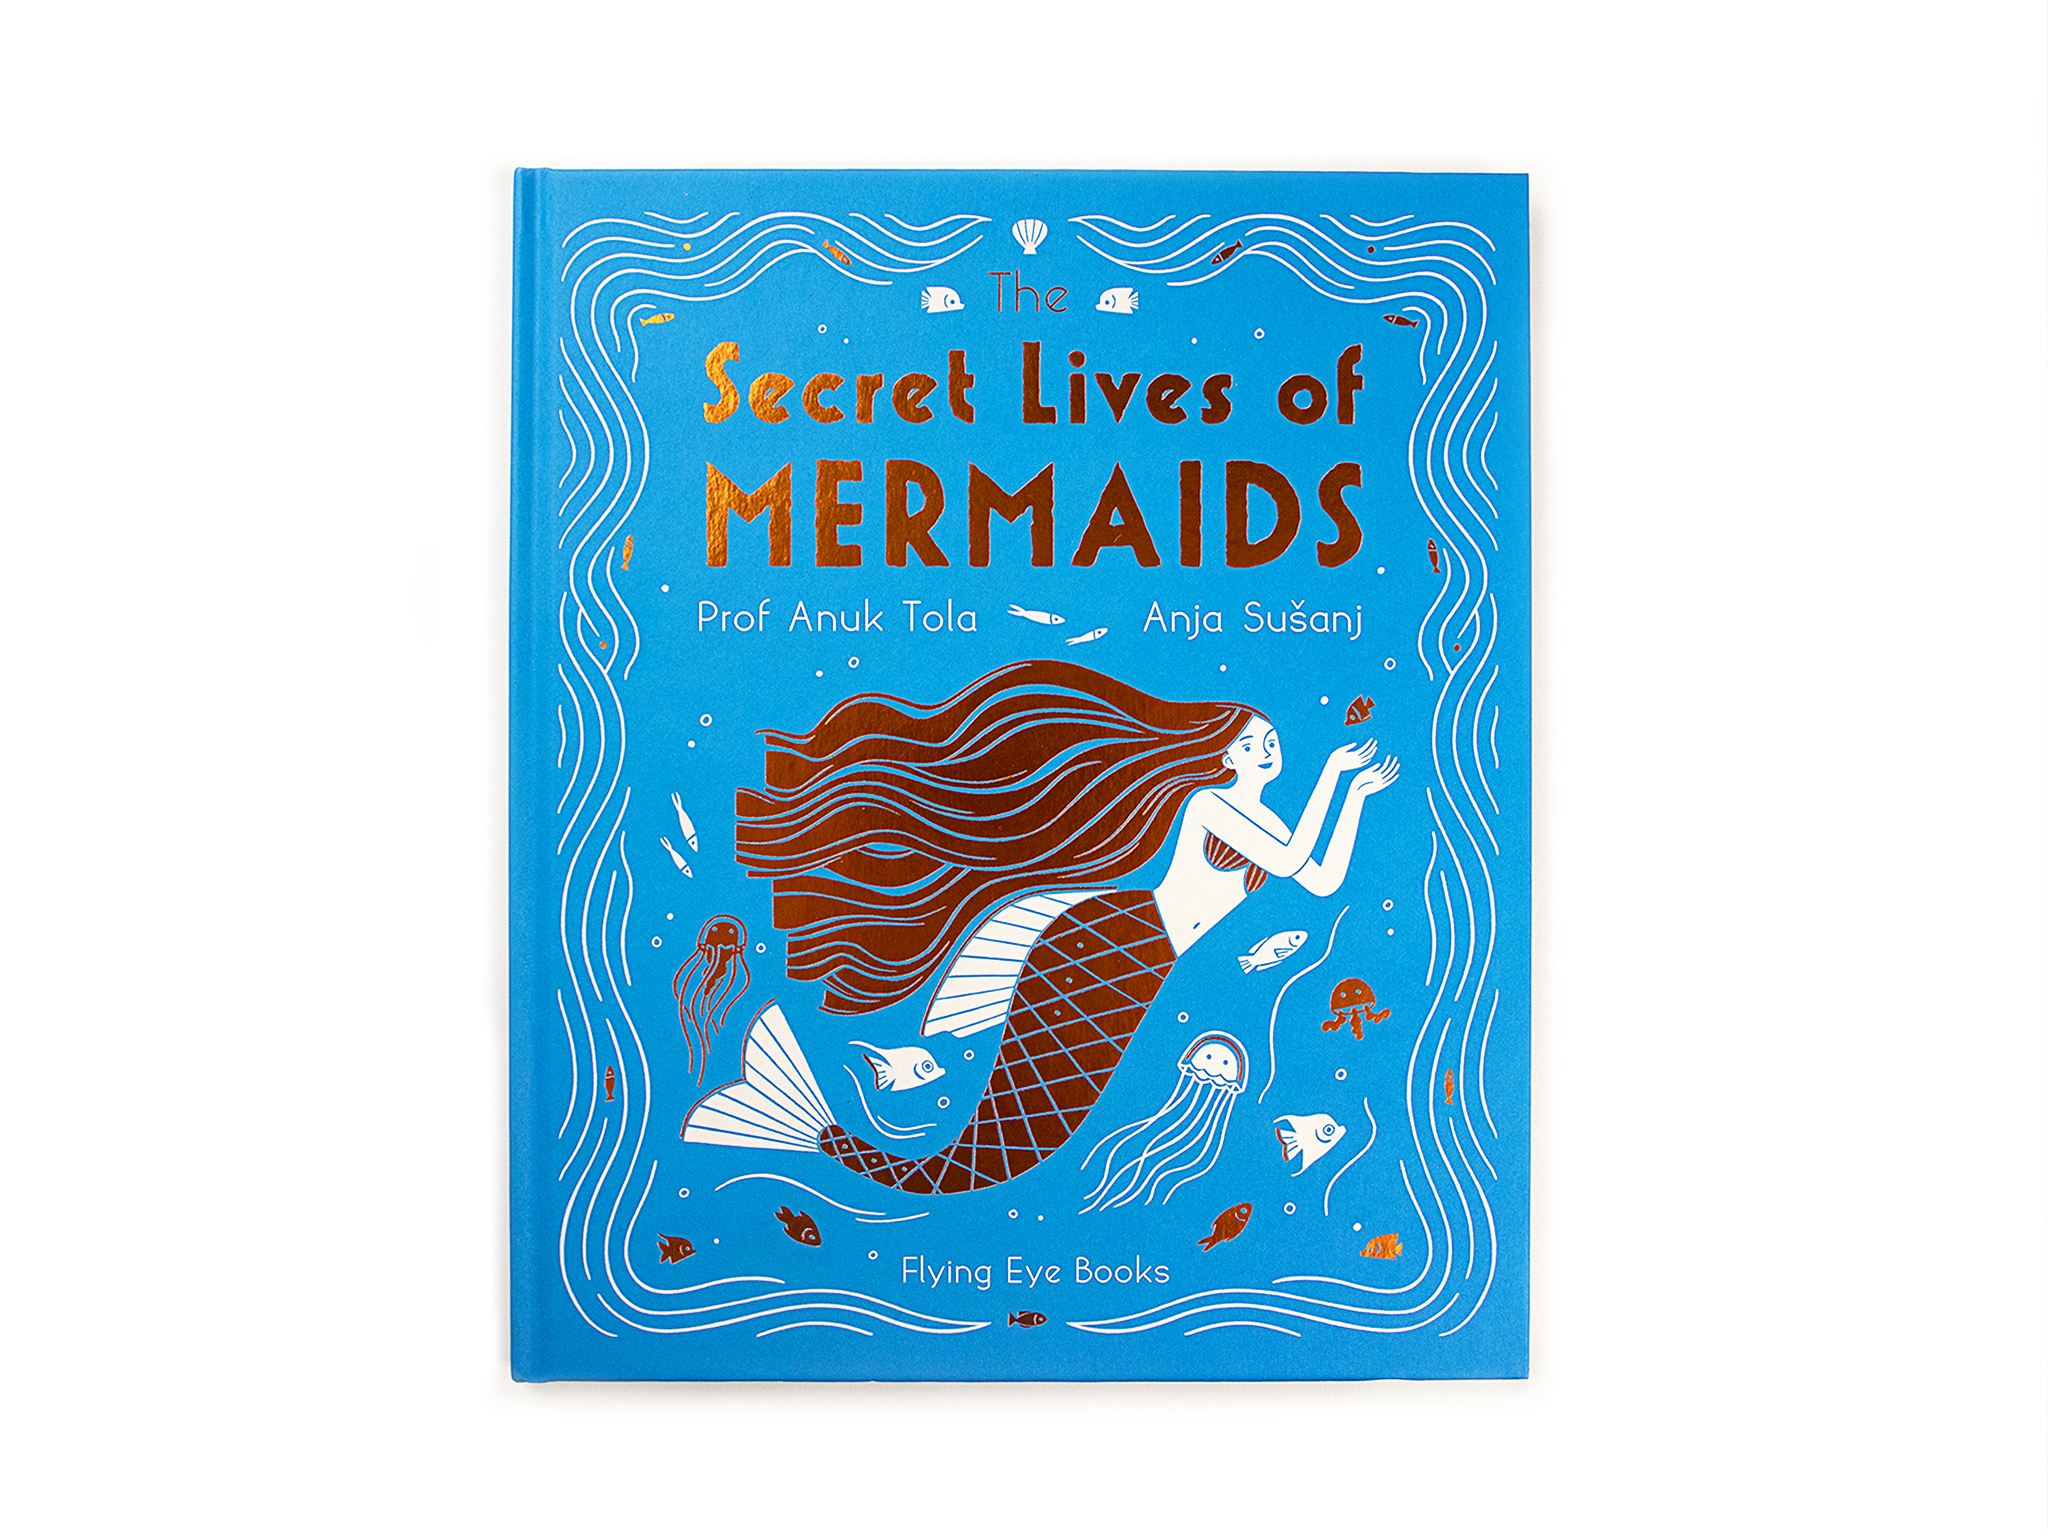 Of mermaid life secret Episodes